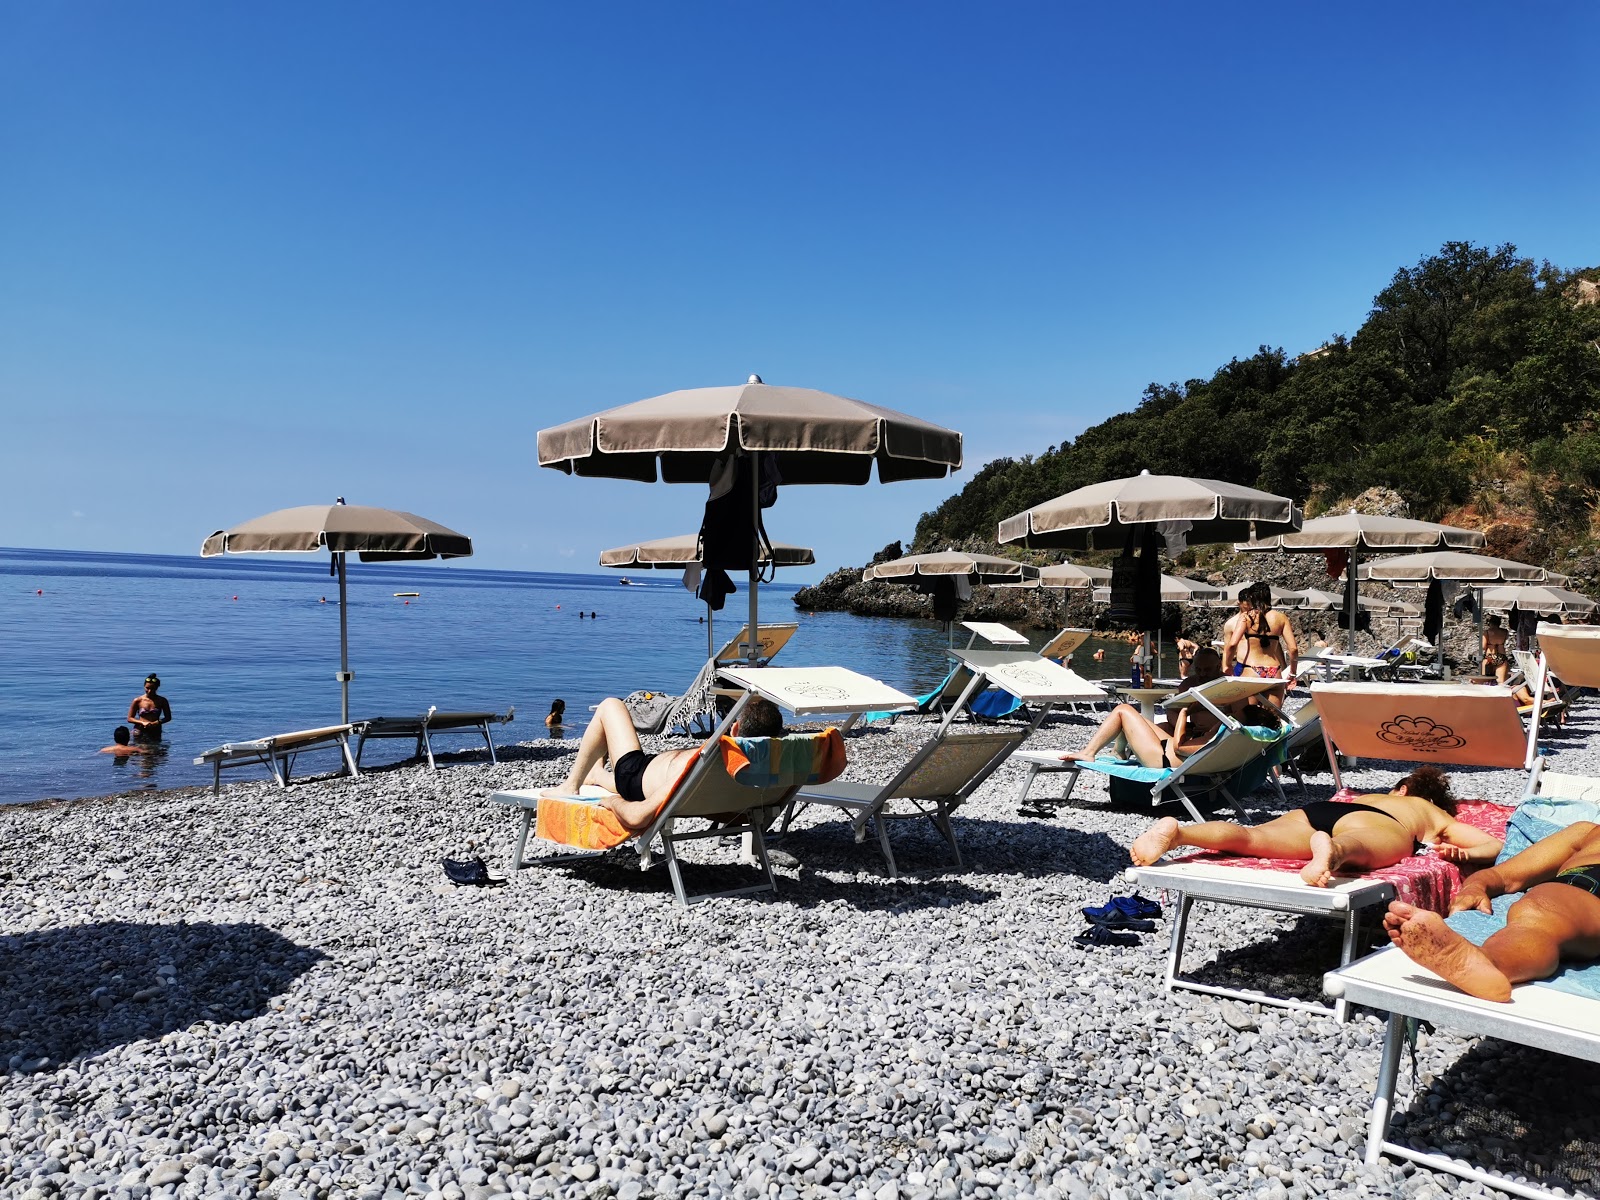 Spiaggia Portacquafridda的照片 背靠悬崖